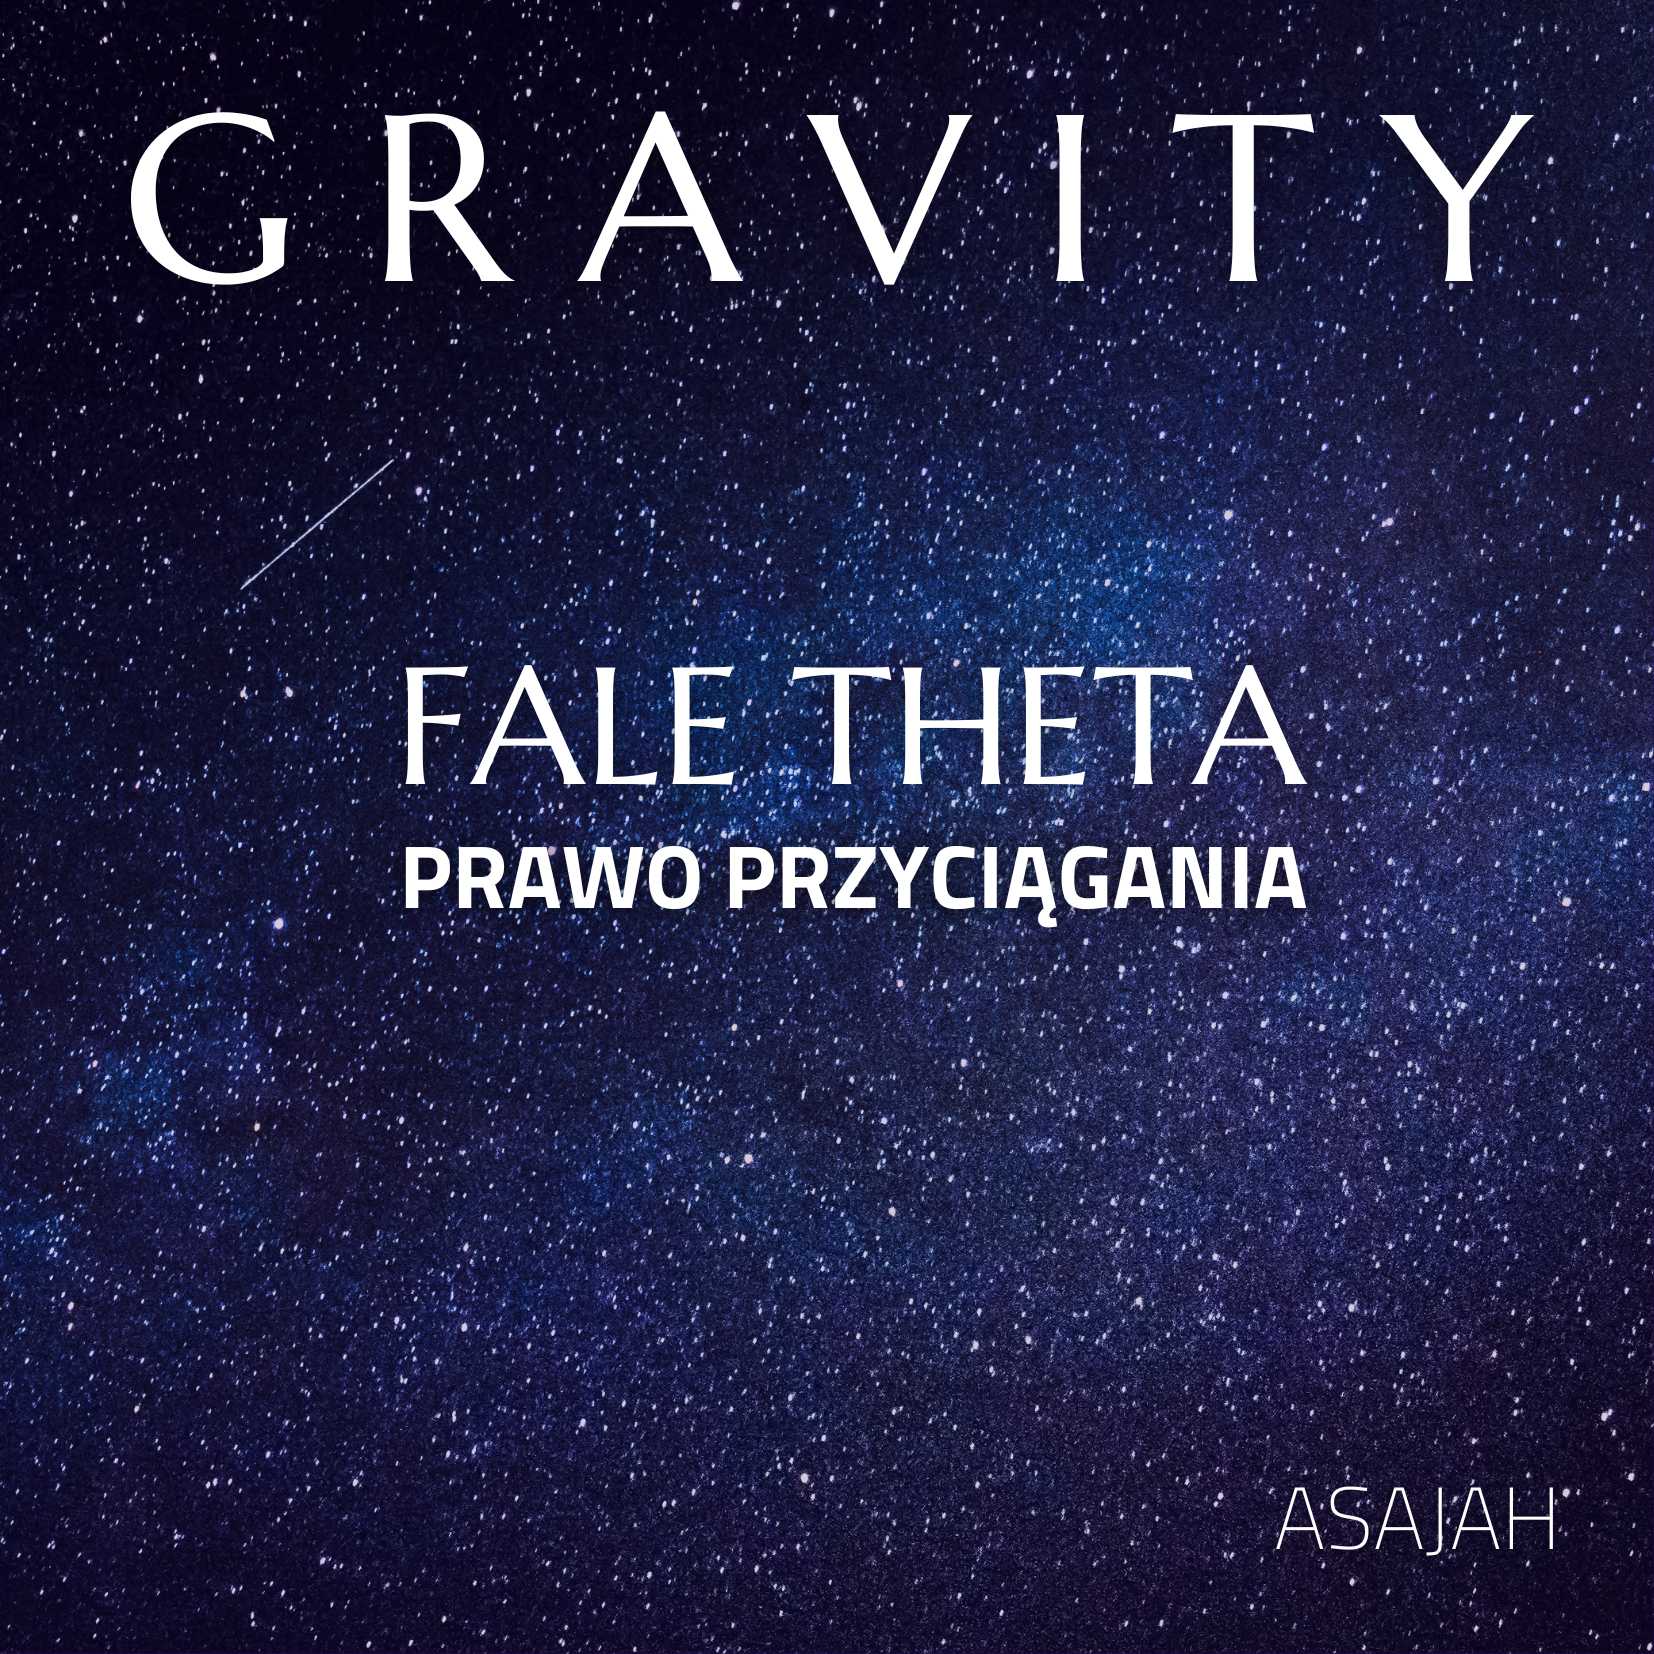 Gravity Fale theta - Prawo przyciagania